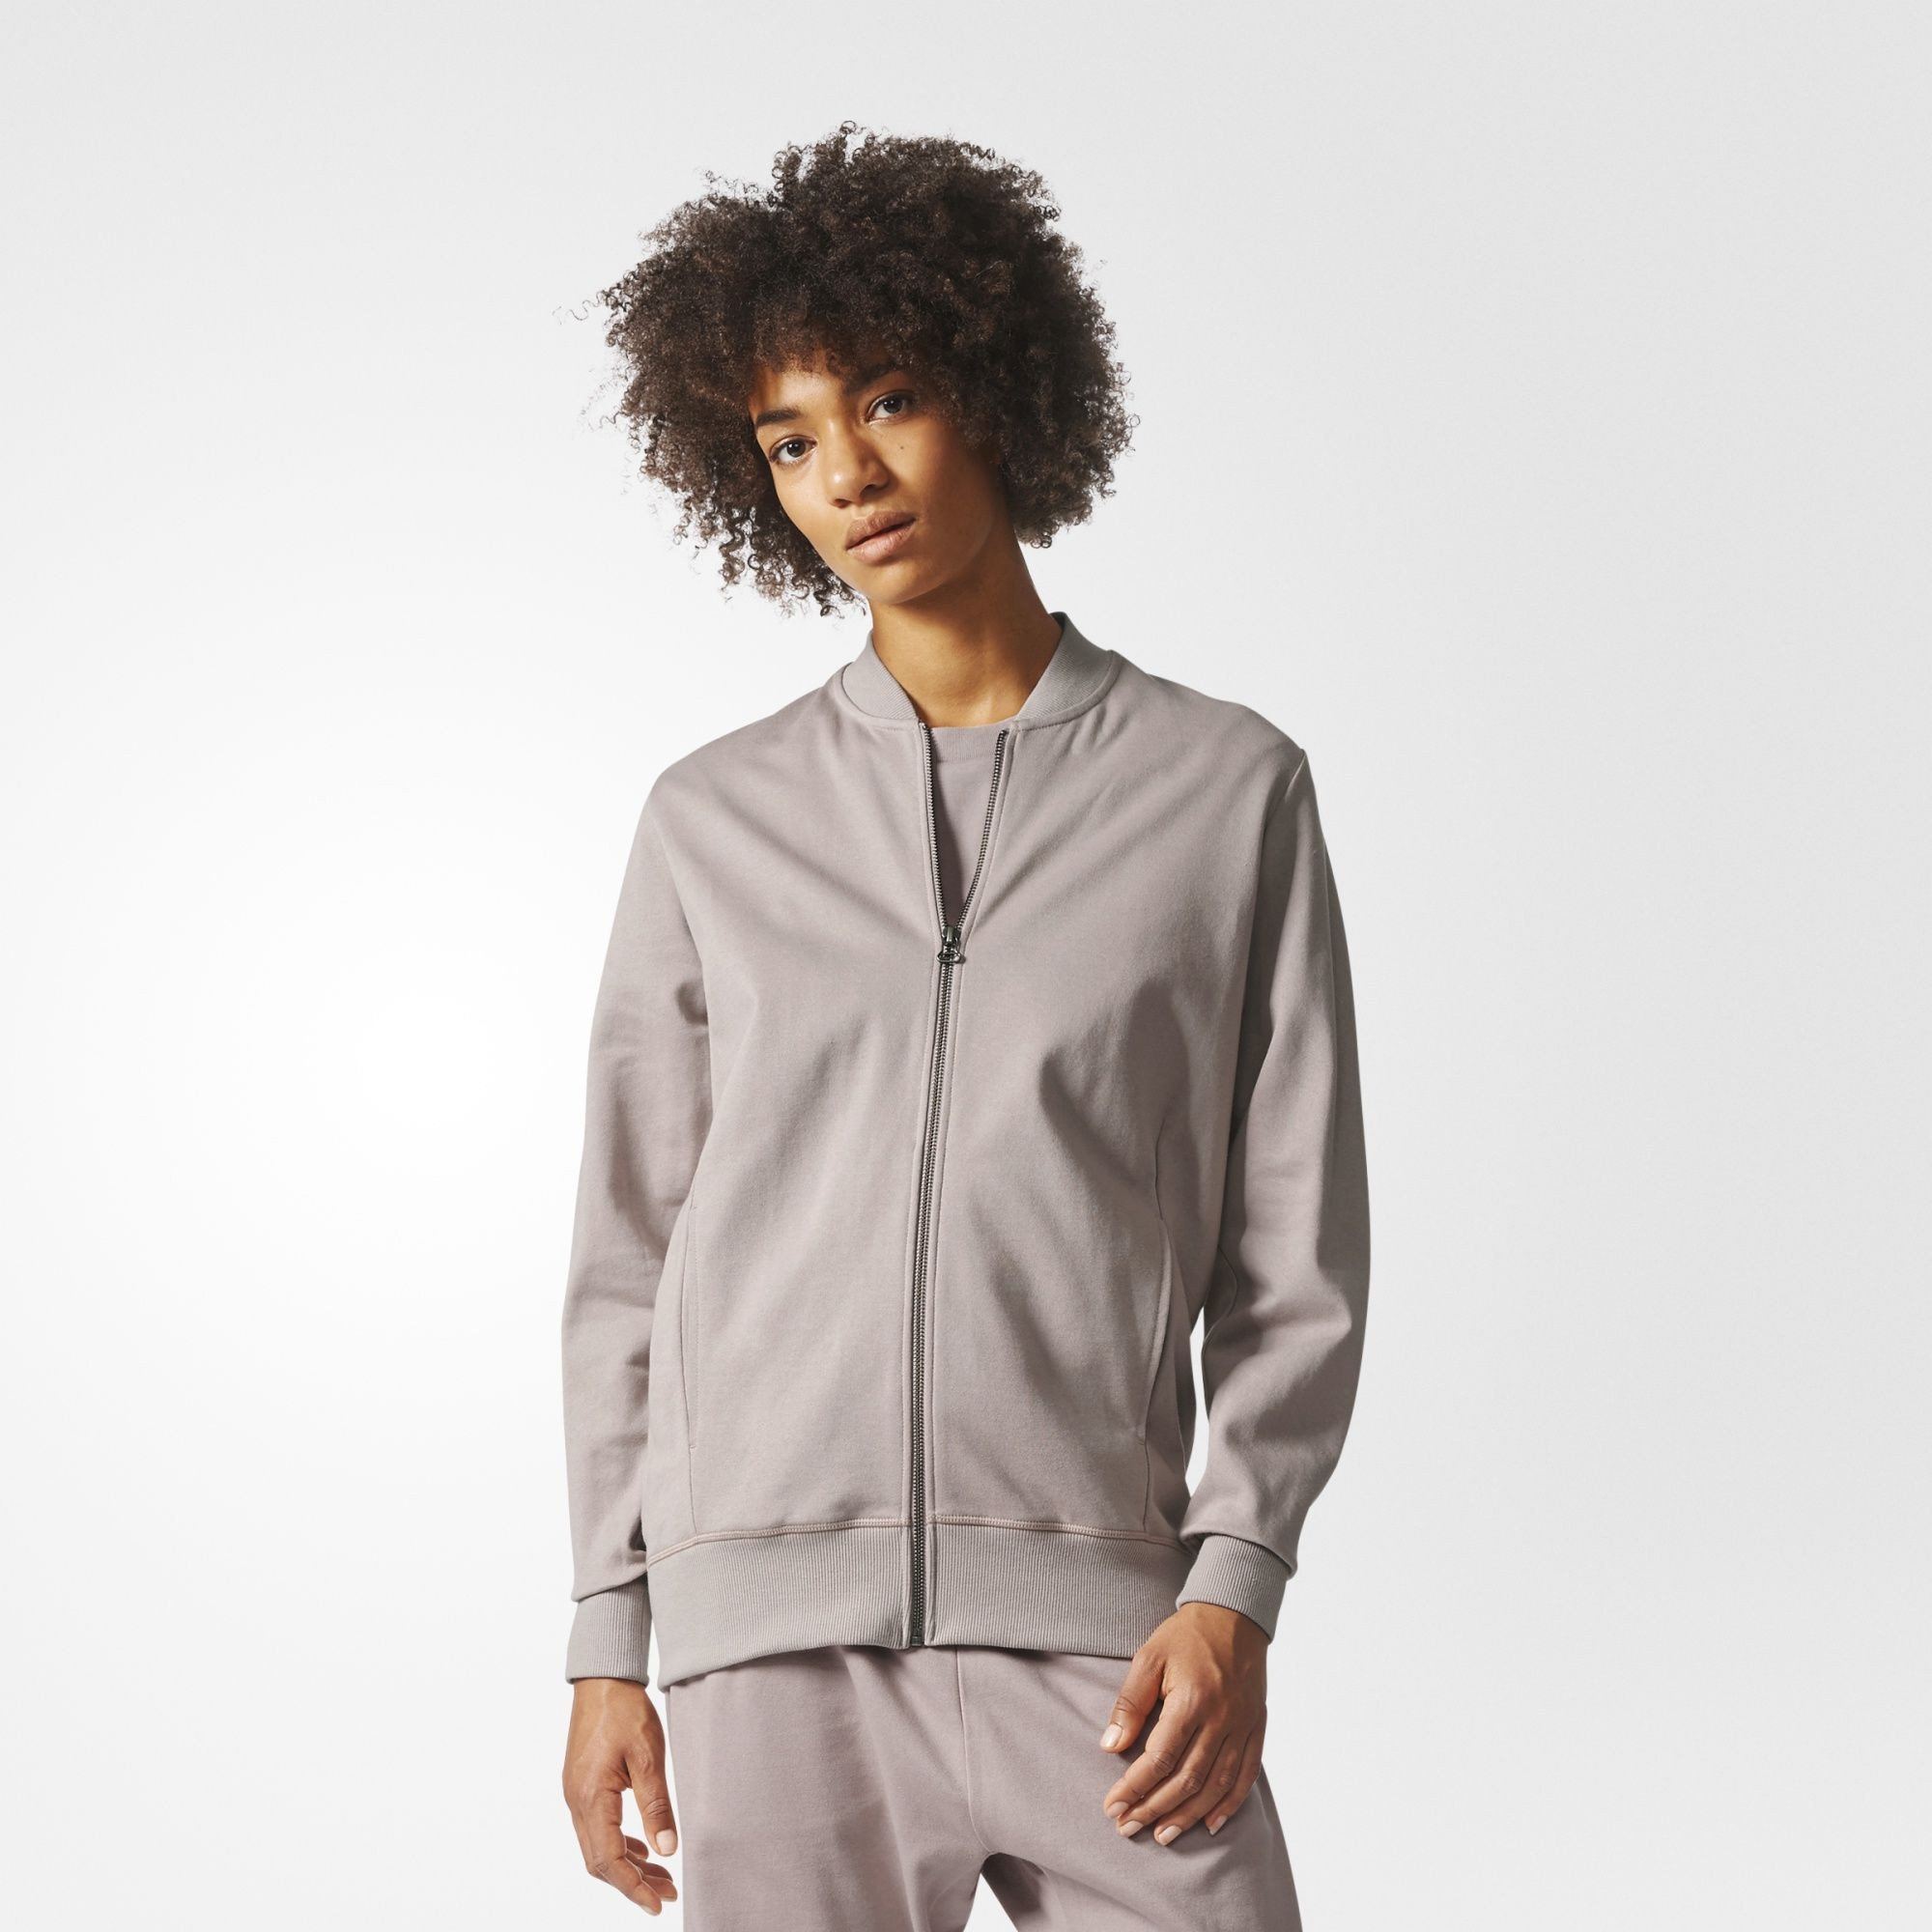 CLOTHING - Adidas Originals Xbyo Track Top Jacket Vapour Grey Women BP6096